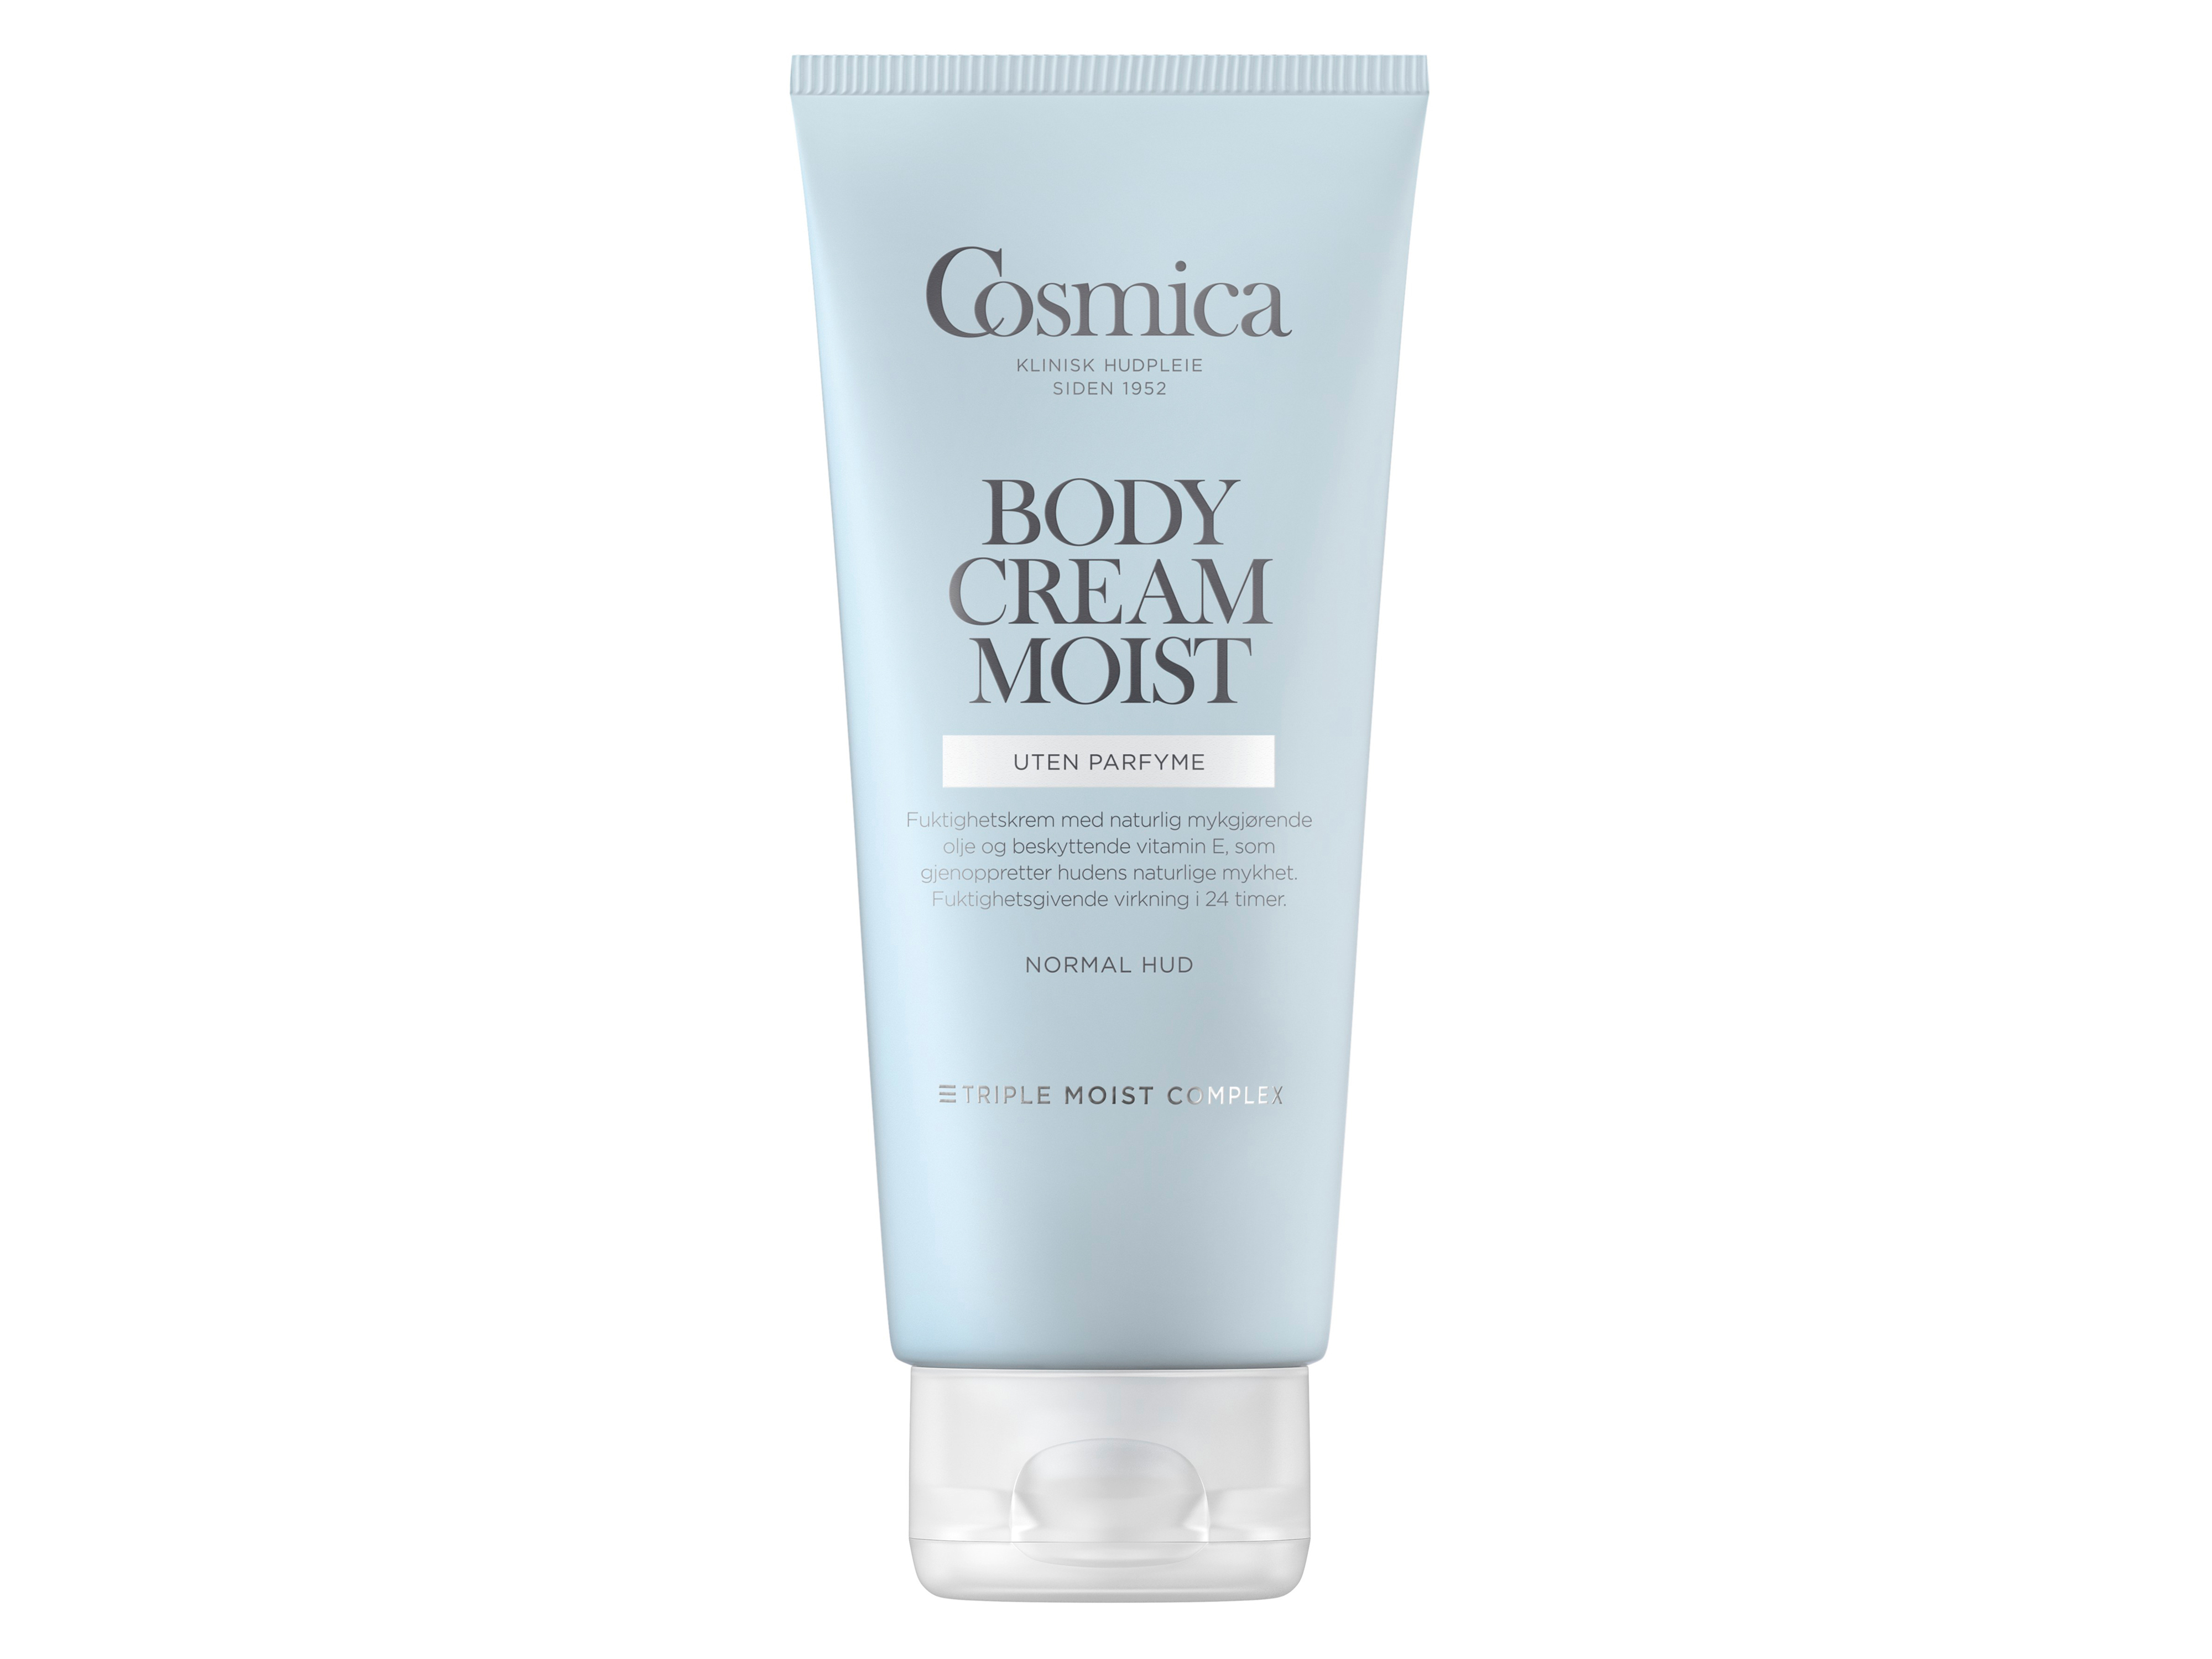 Cosmica Body Cream Moist uten parfyme, 200 ml